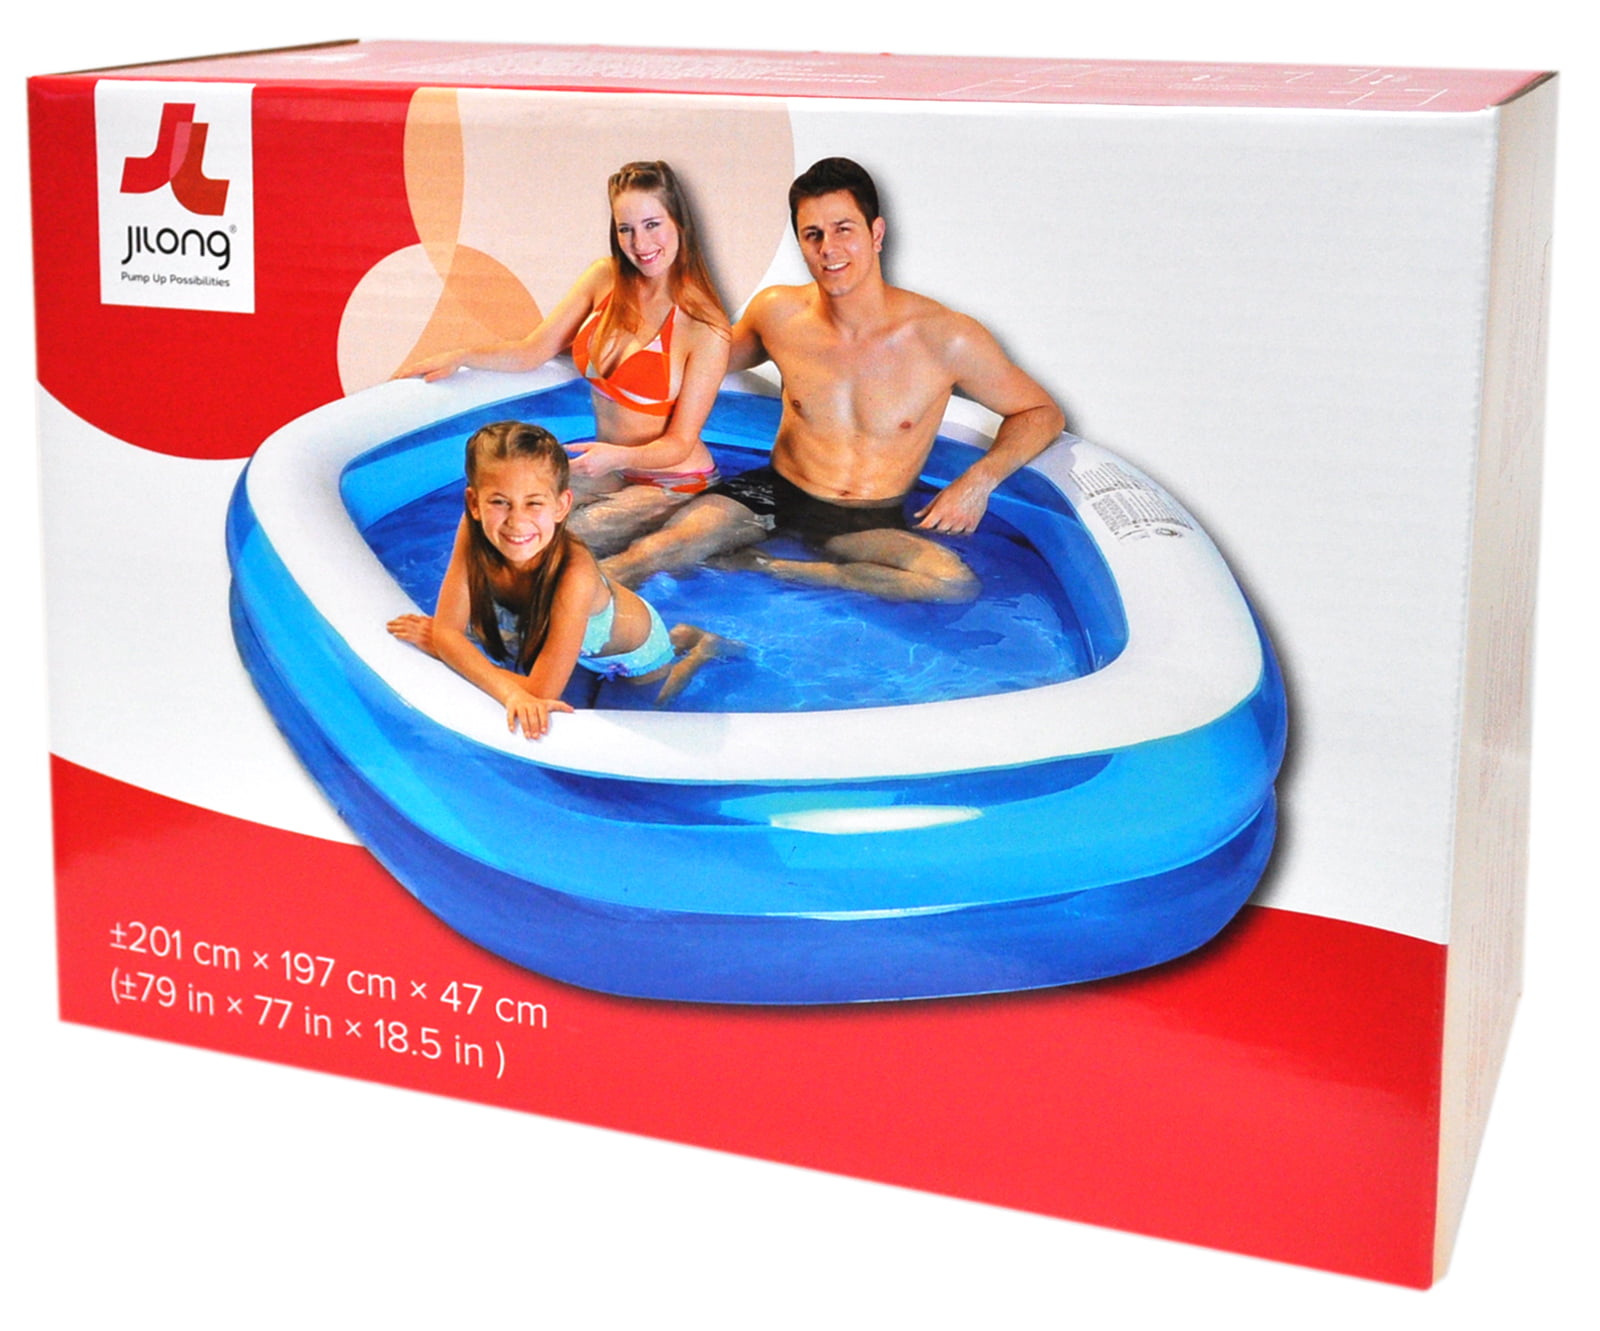 Jilong Pentagon Inflatable Family Pool 79 x 77 x 18.5 79 x 77 x 18.5 Jilong Toys 17222